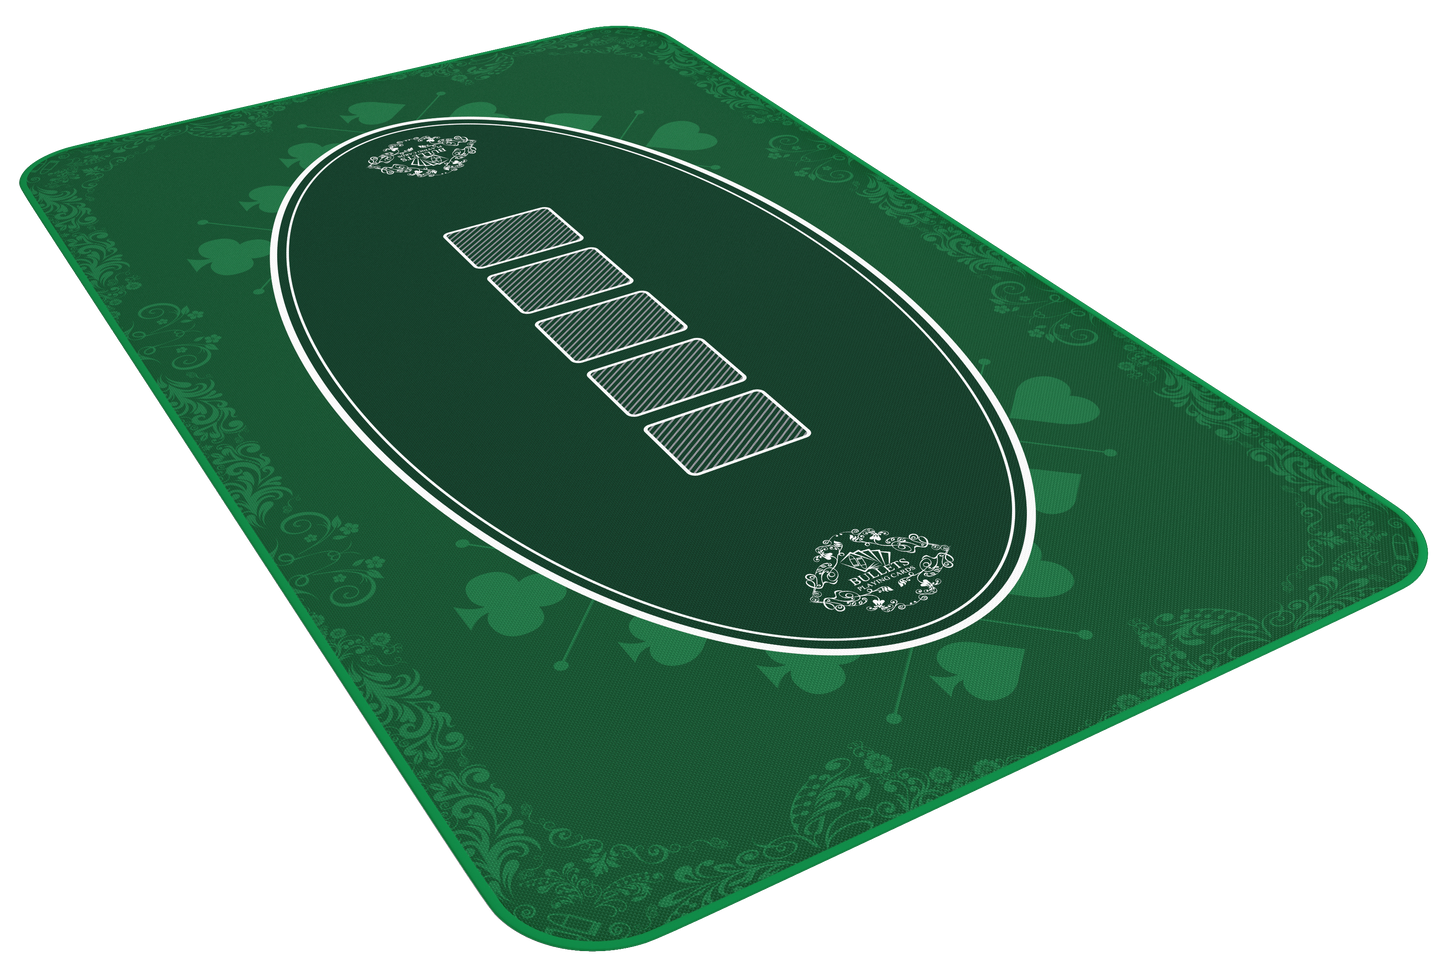 Poker mat 100x60 cm, square - casino design